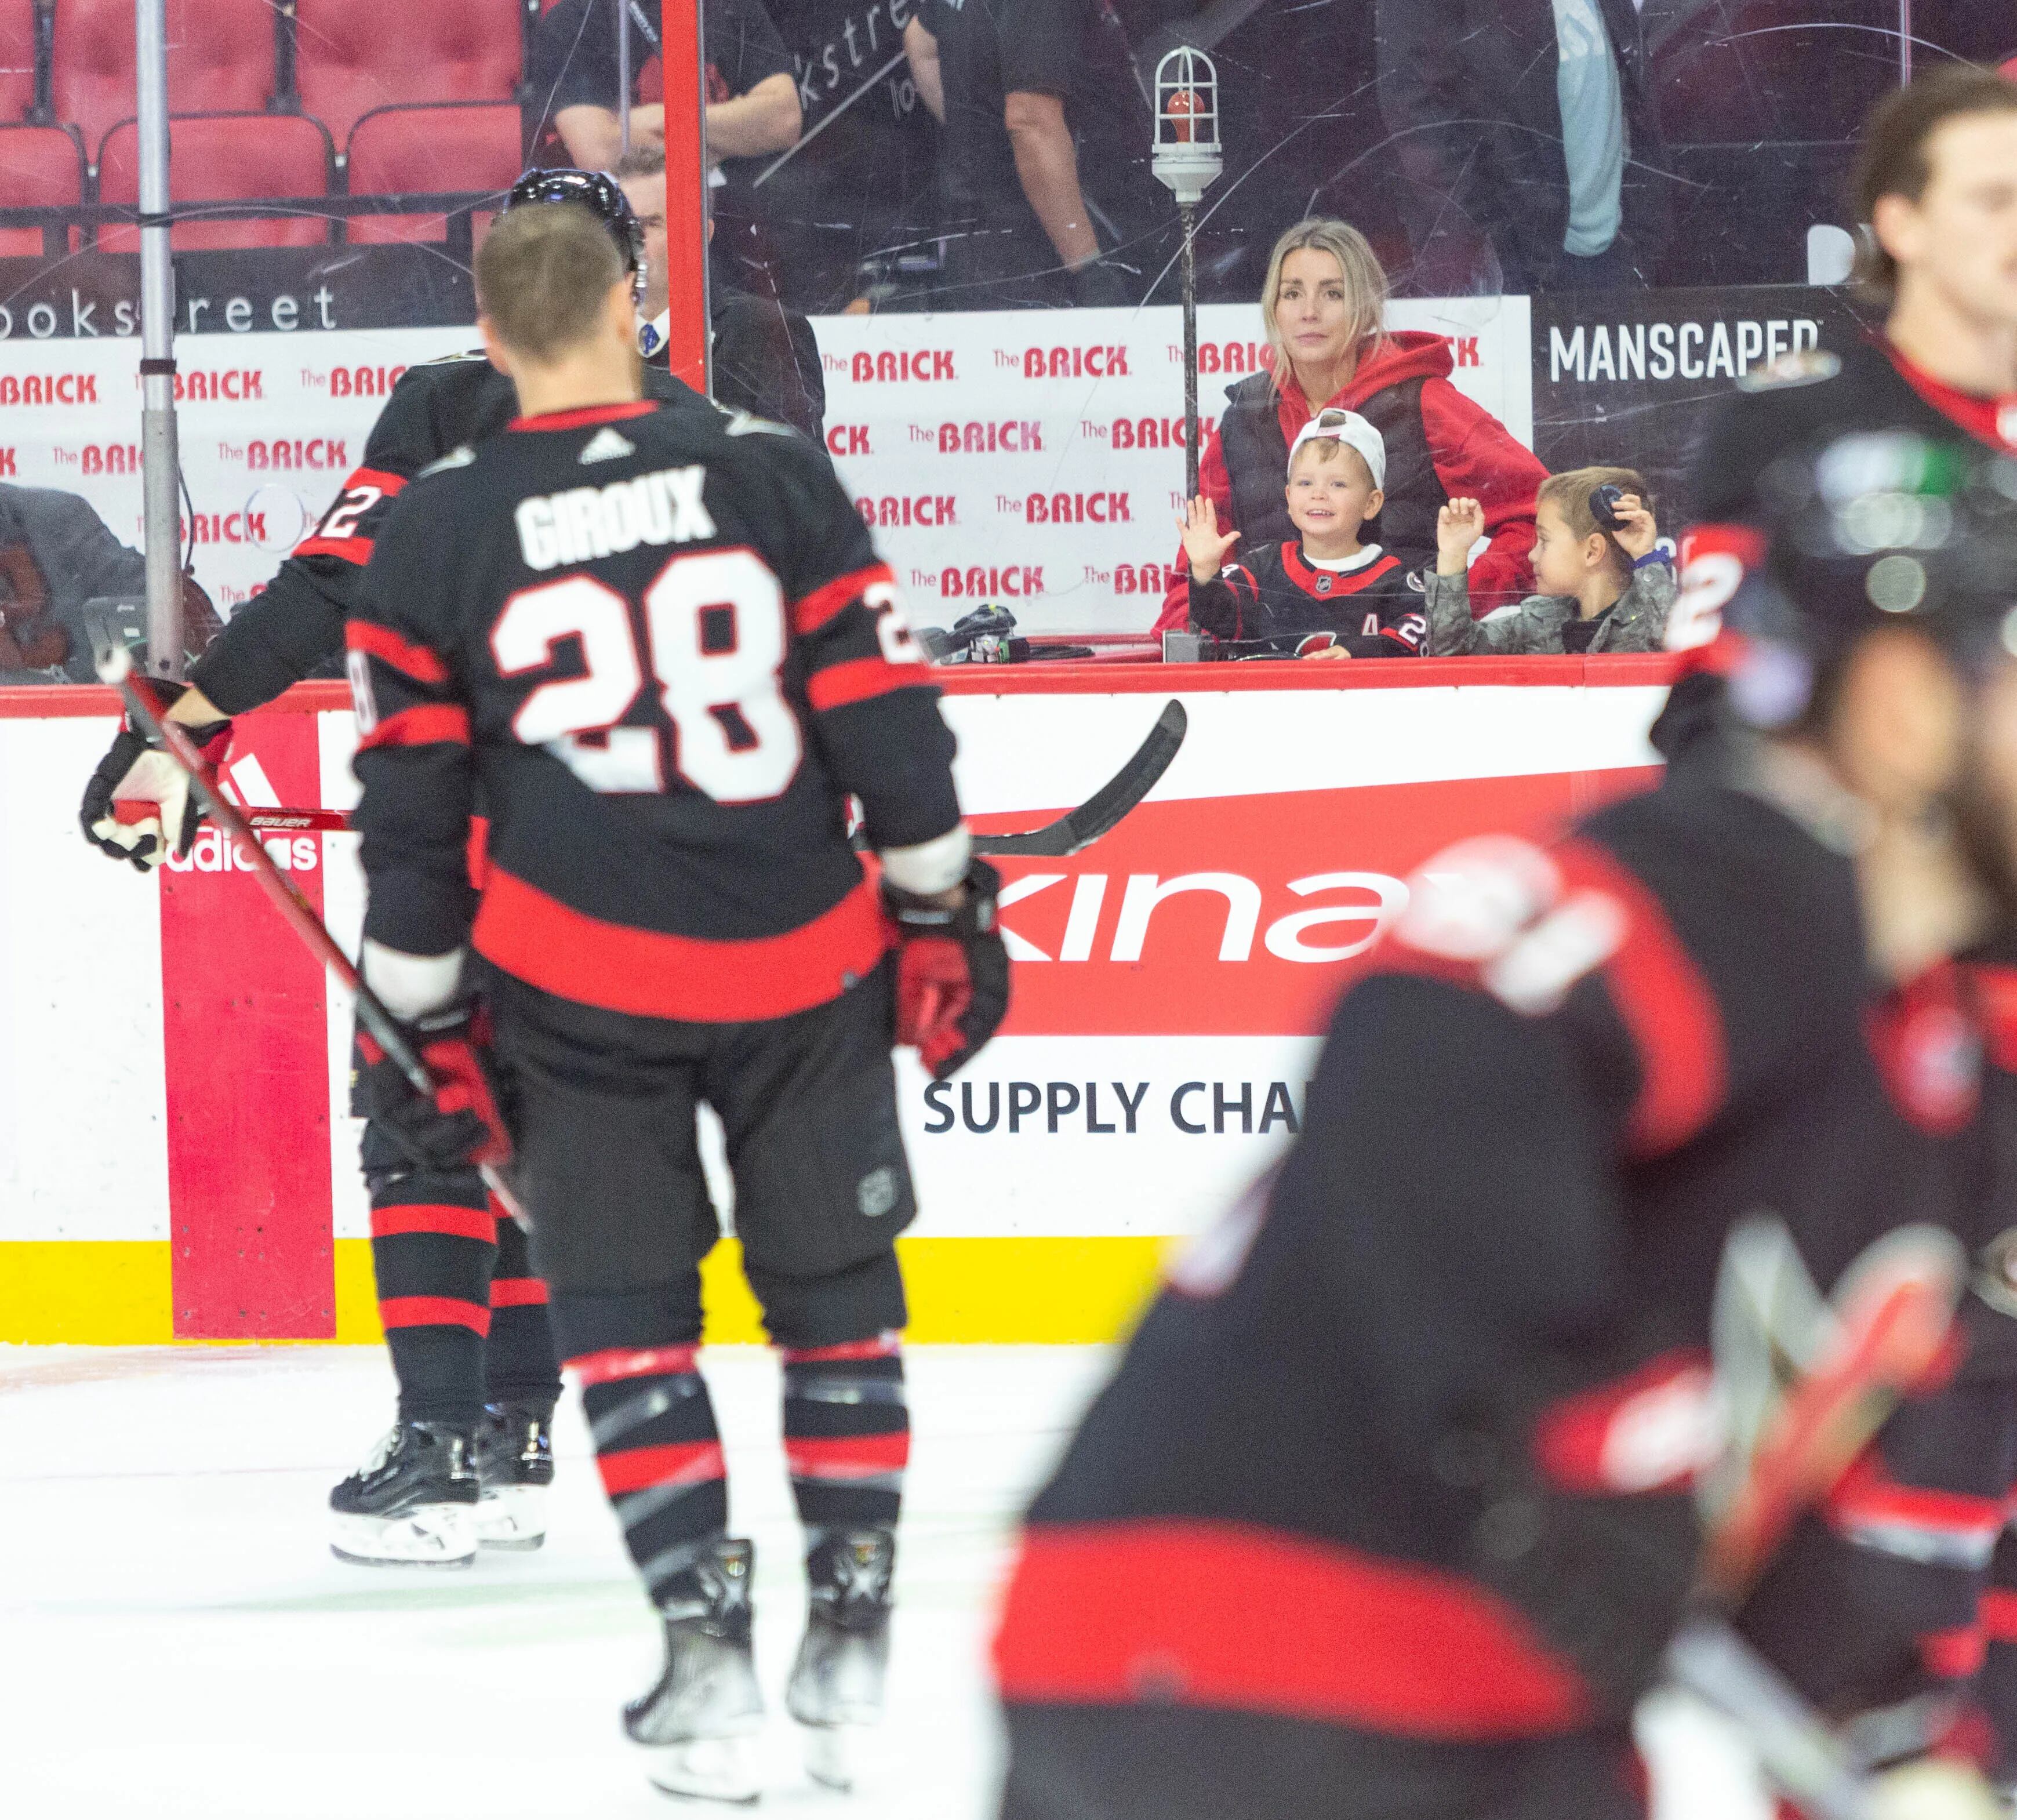 Ottawa Senators: Giroux impresses in 3-1 win over Jets